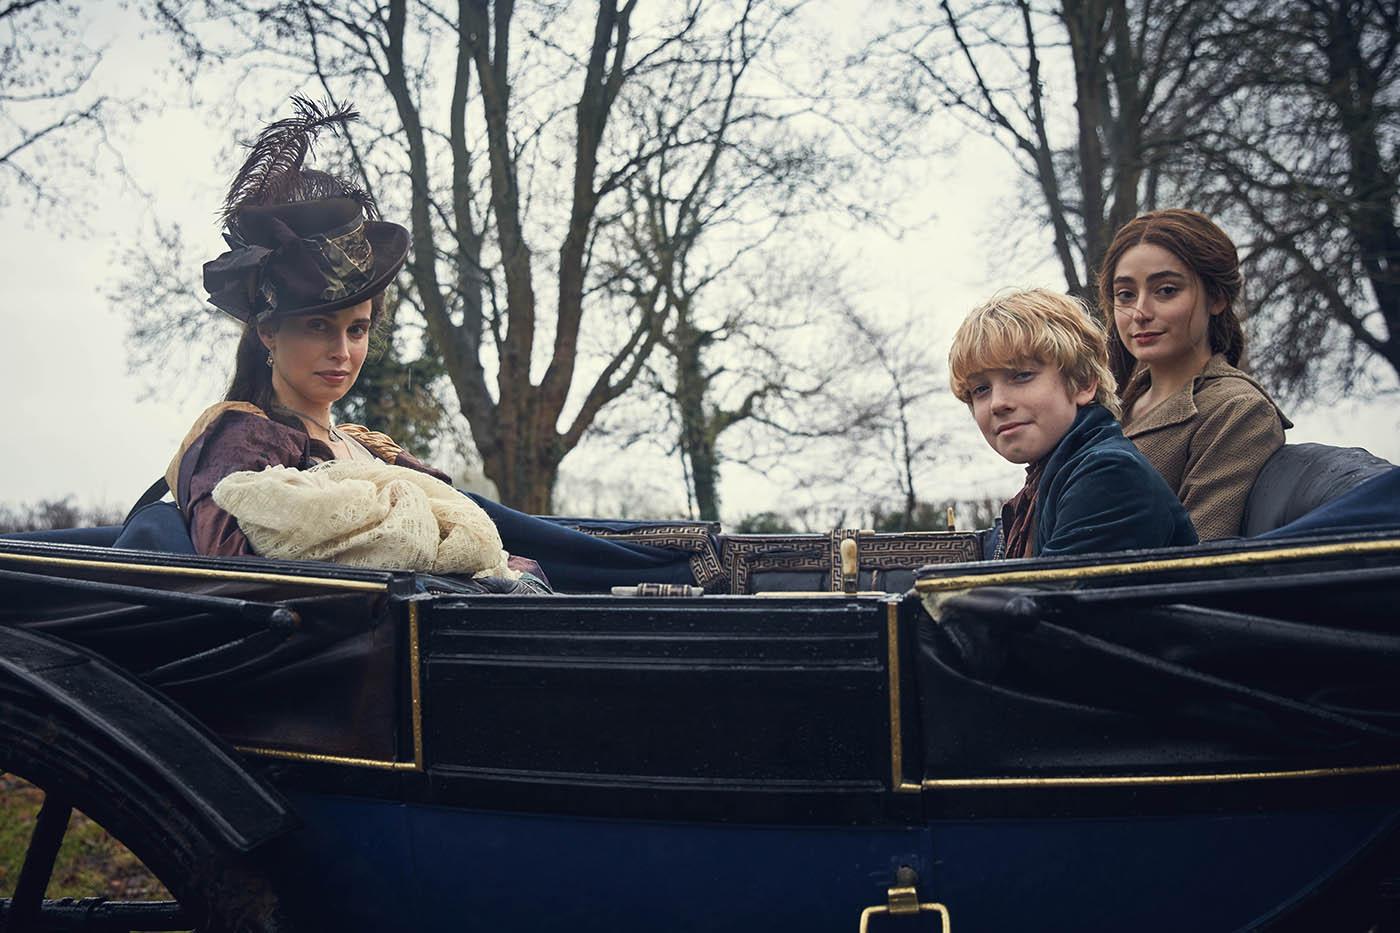 Elizabeth, Morwenna, and Geoffrey Charles in Poldark. Photo: Mammoth Screen for BBC and MASTERPIECE